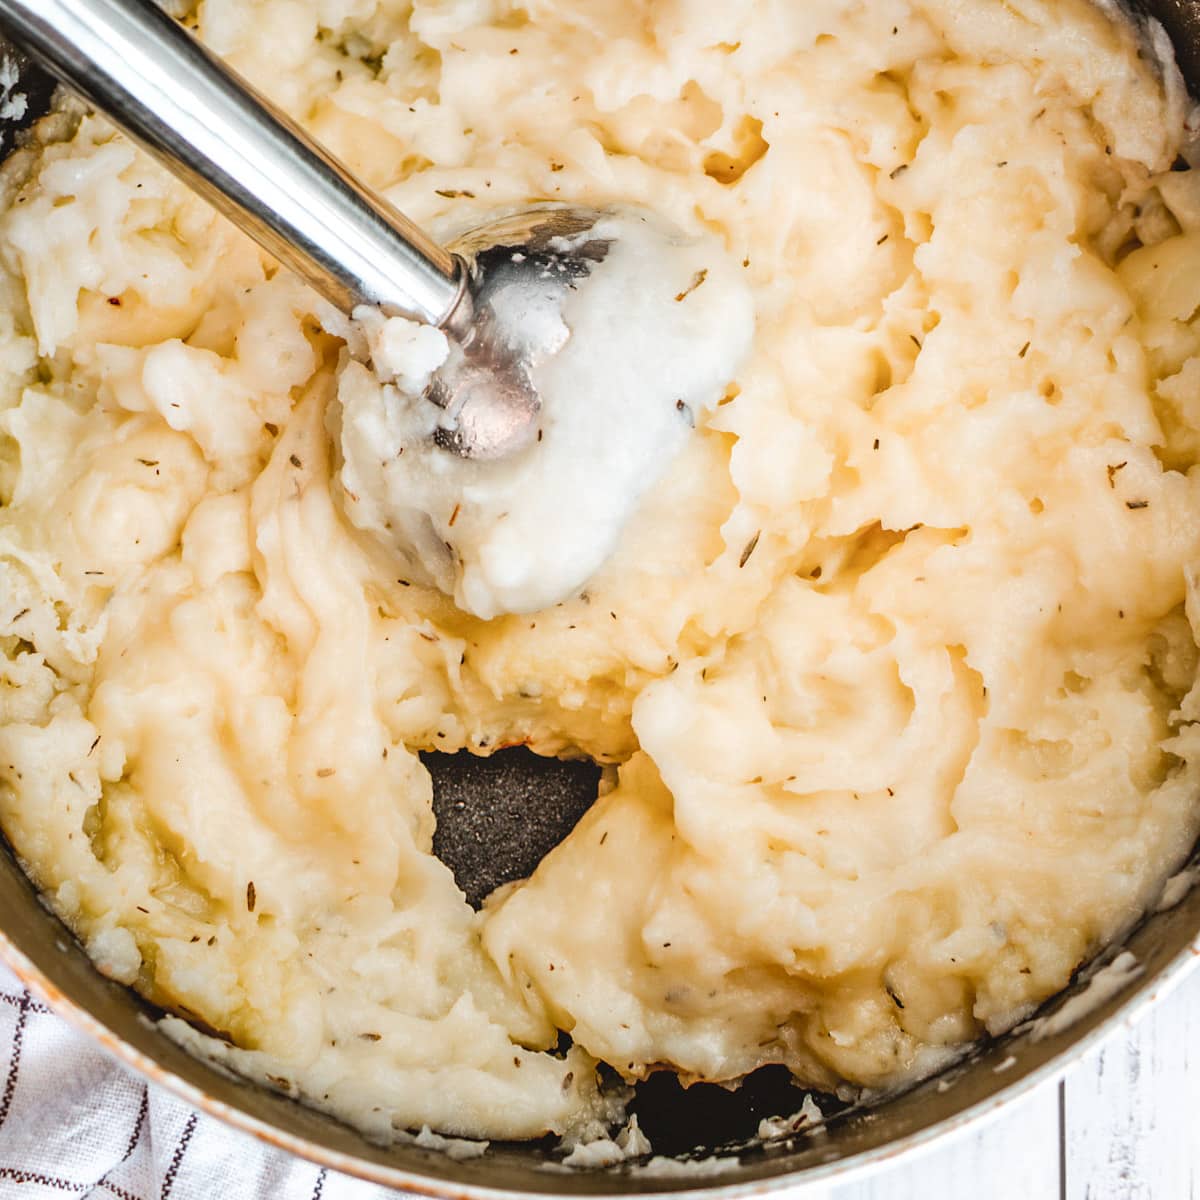 immersion blender in a pot of vegan mashed potatoes